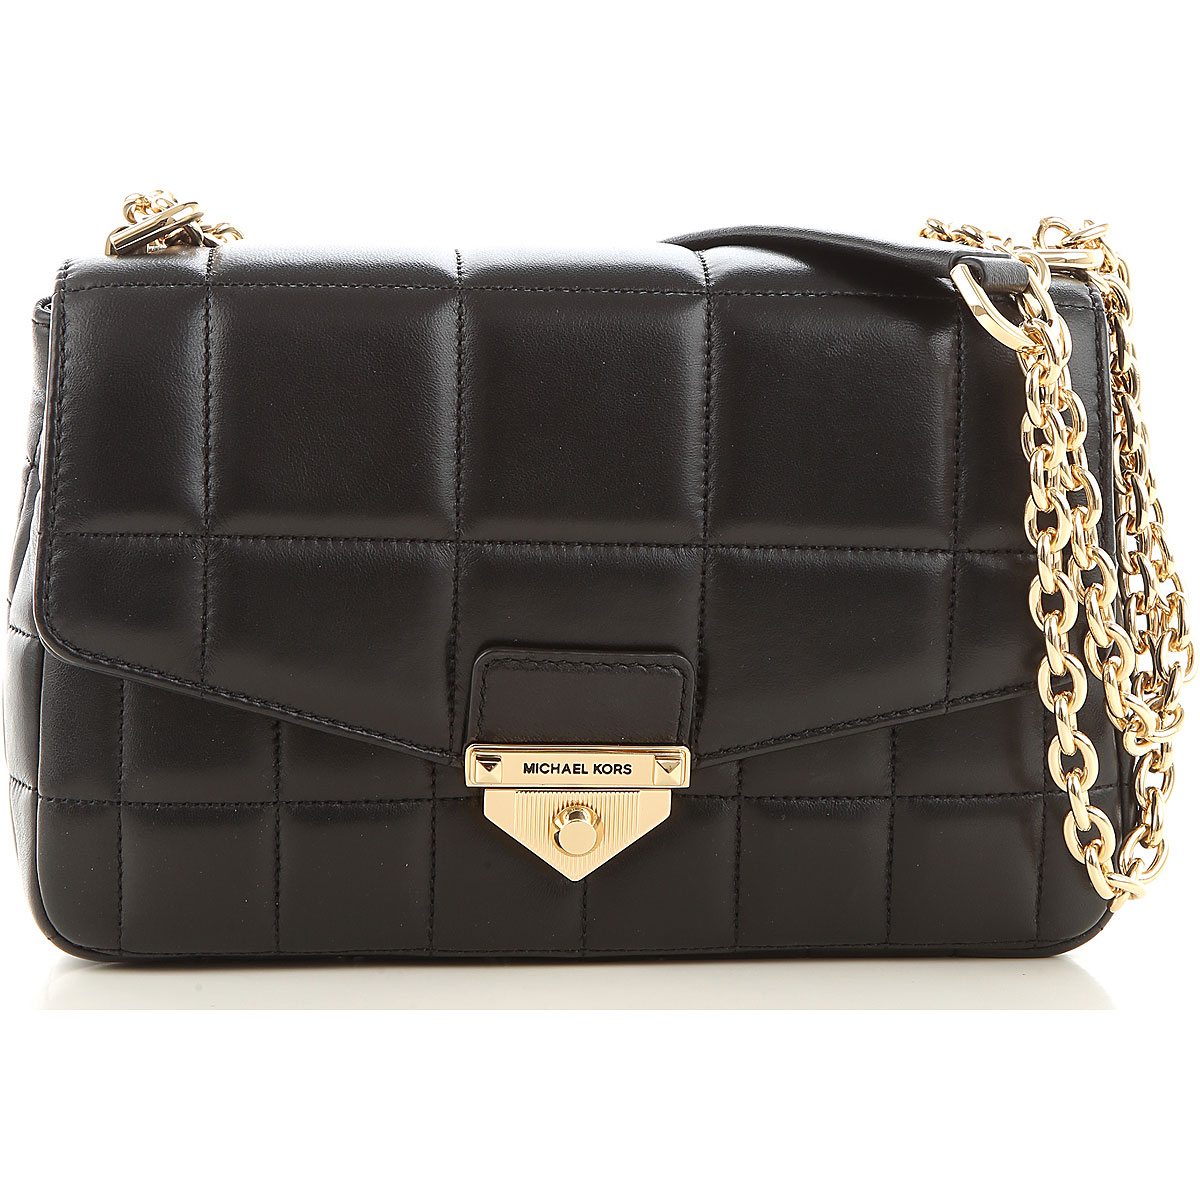 Handbags Michael Kors, Style code: 30f0g1sl3l-001-